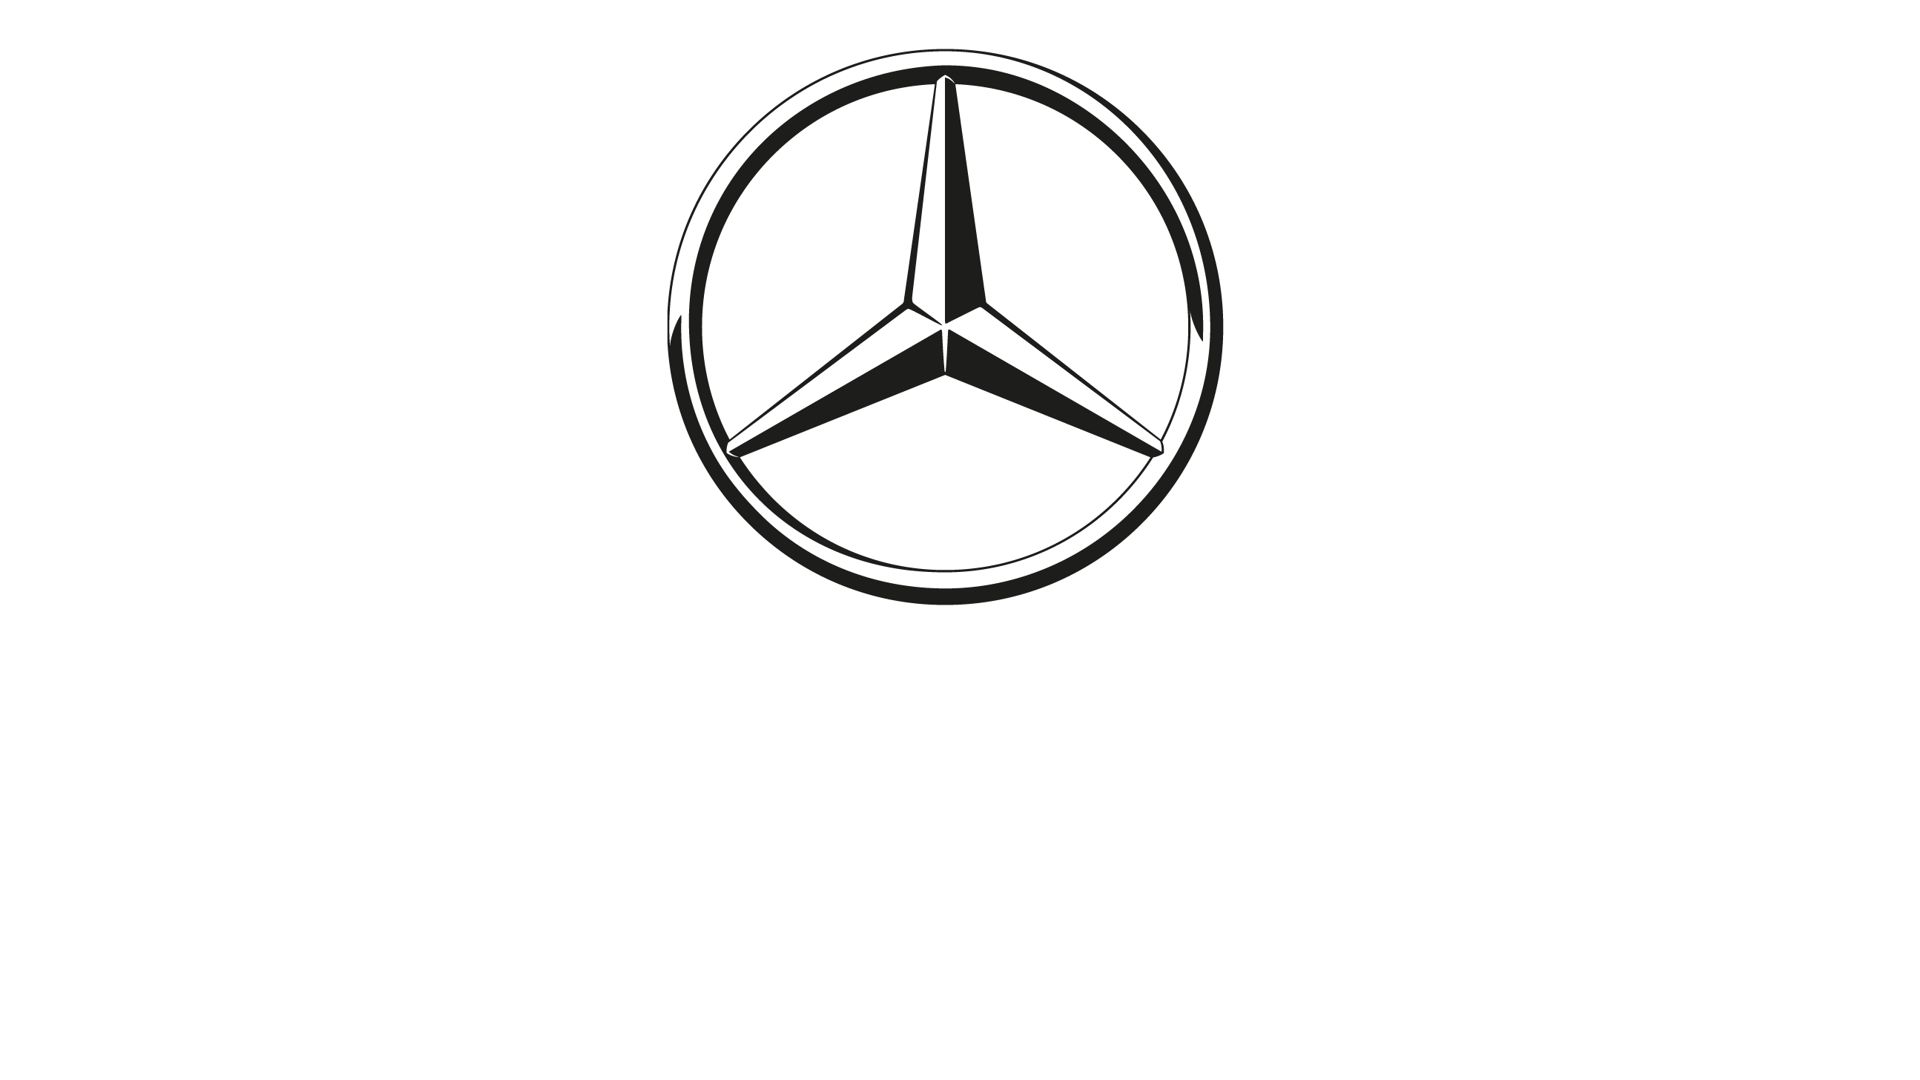 Investor Relations  Mercedes-Benz Group > Investors